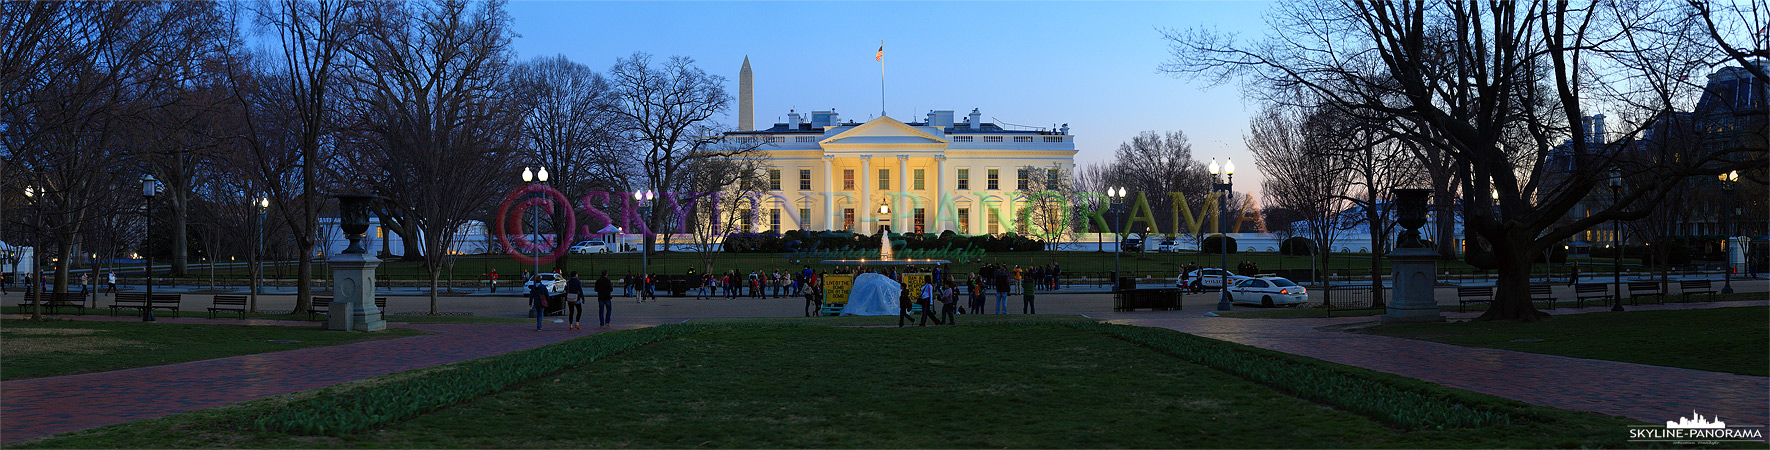 Washington D.C. – White House Panorama (p_00772)